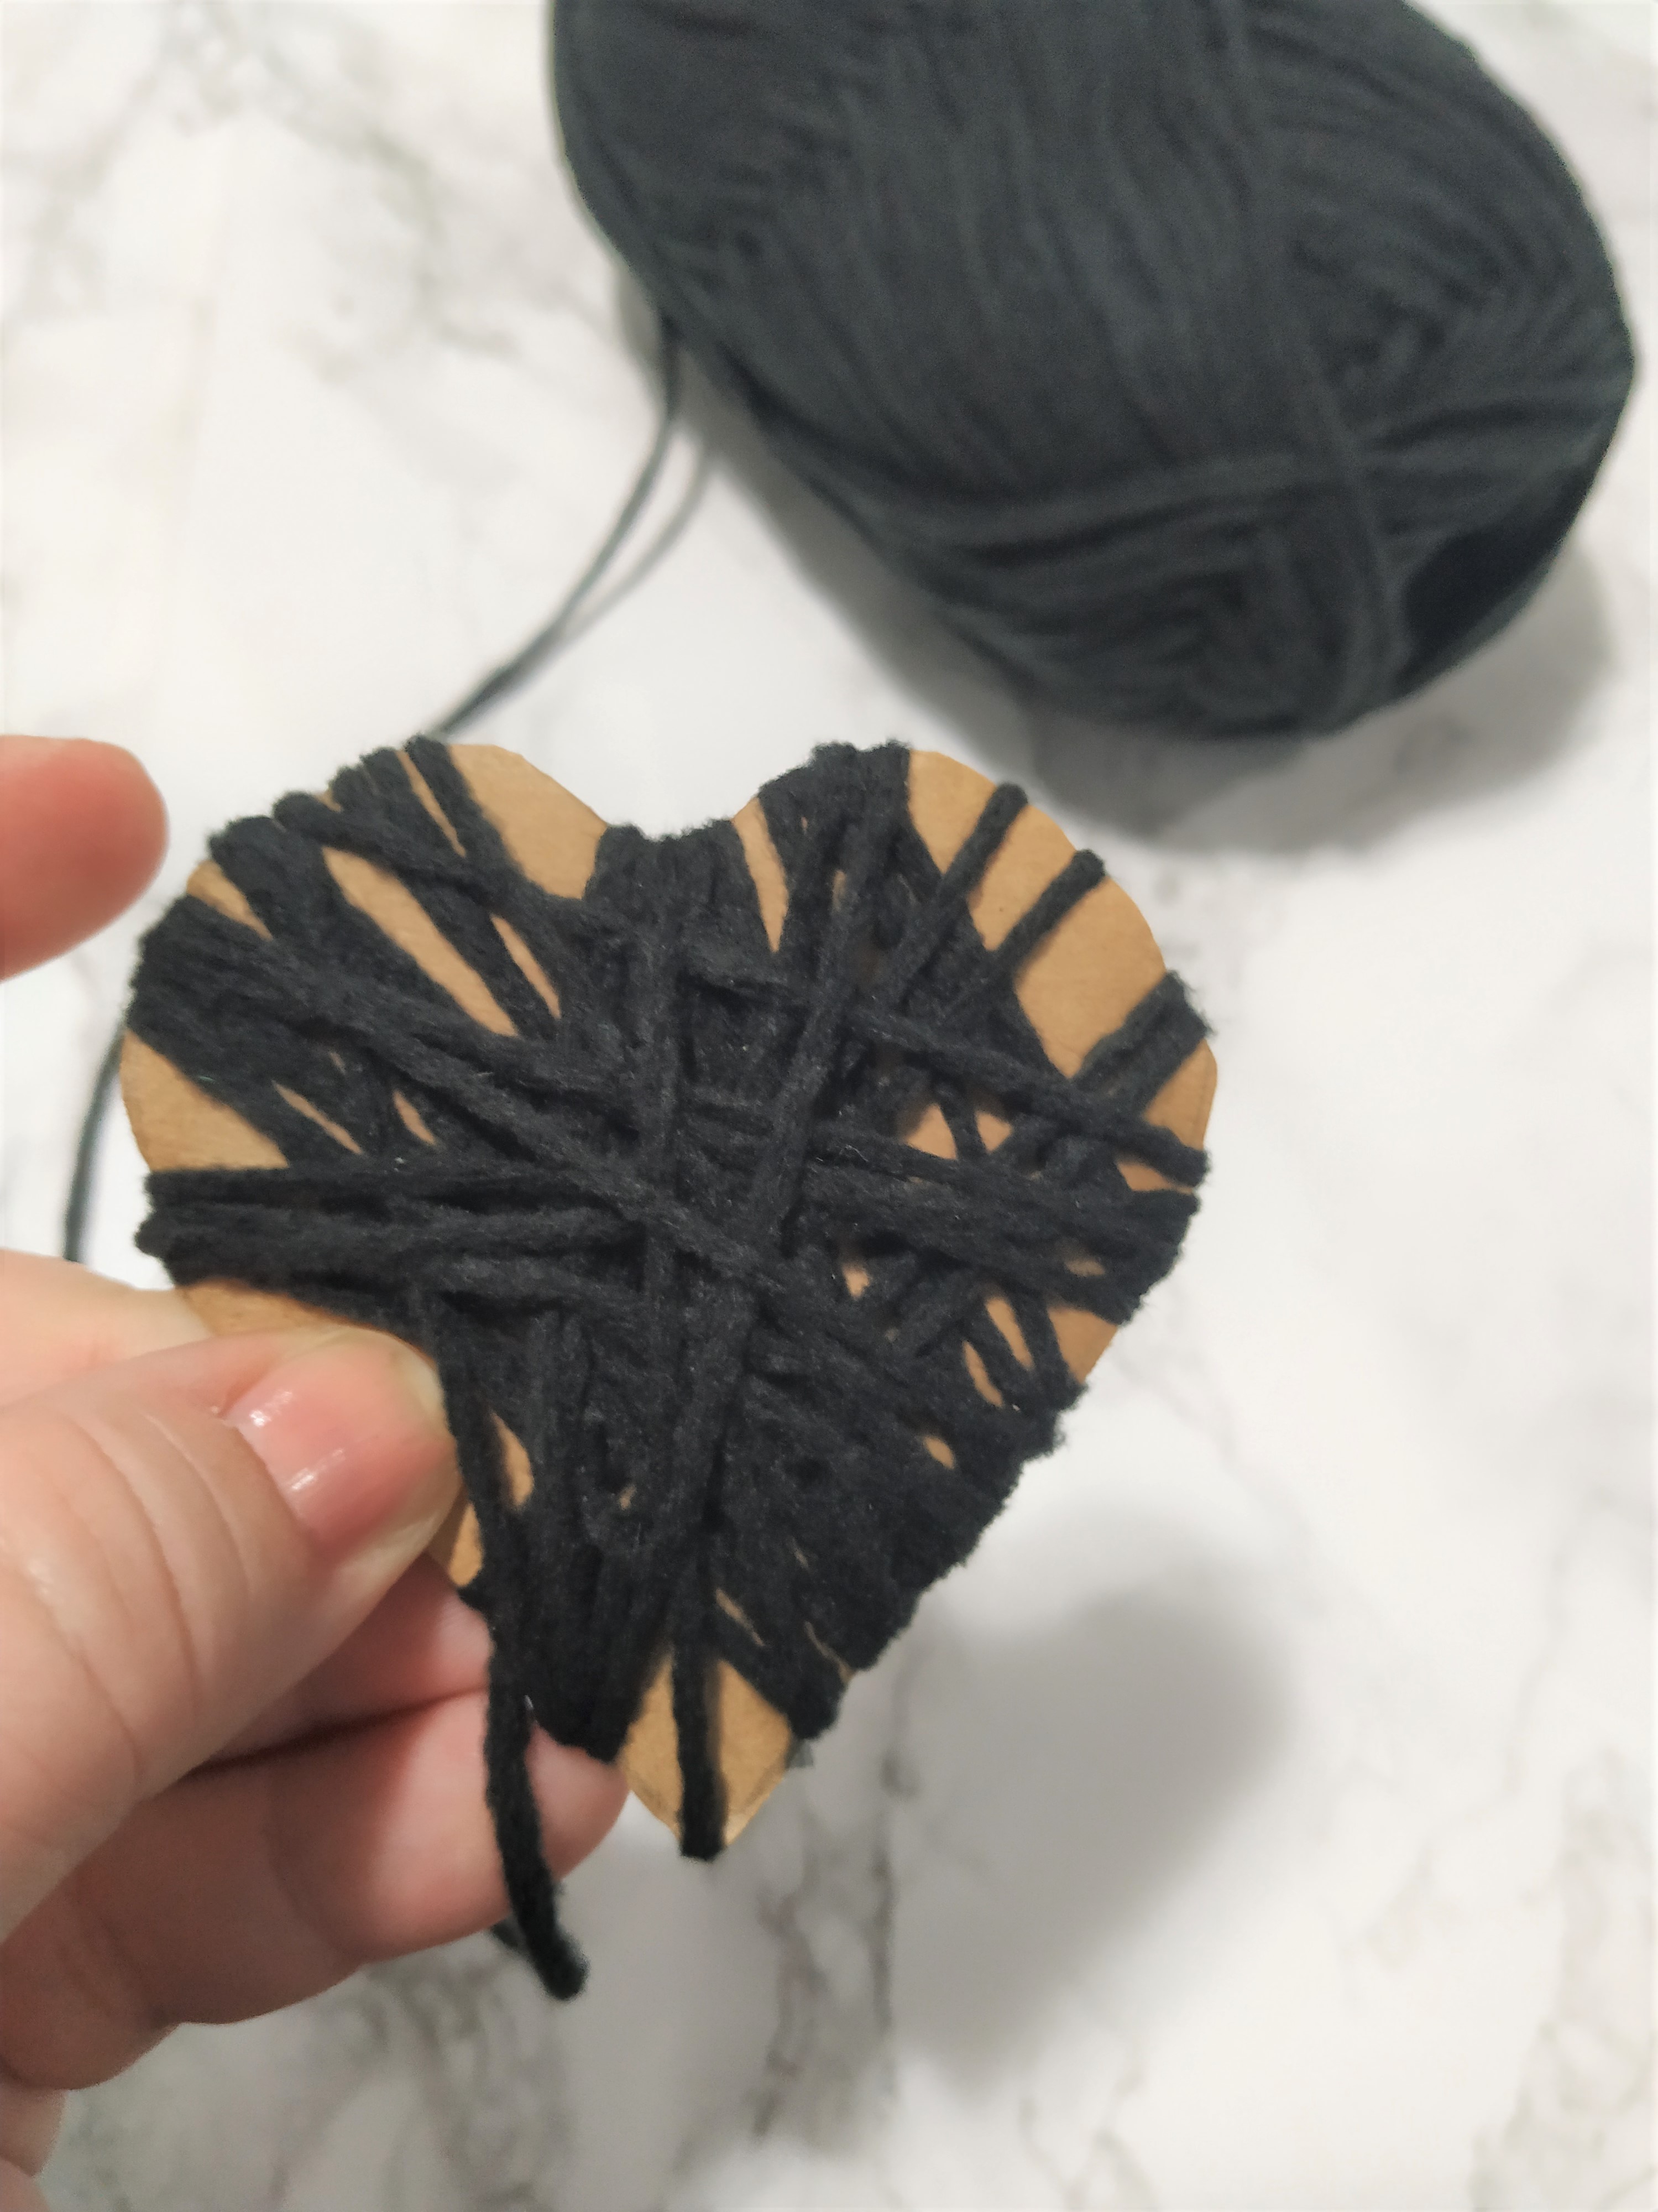 wrapping black yarn around a cardboard heart cut out.